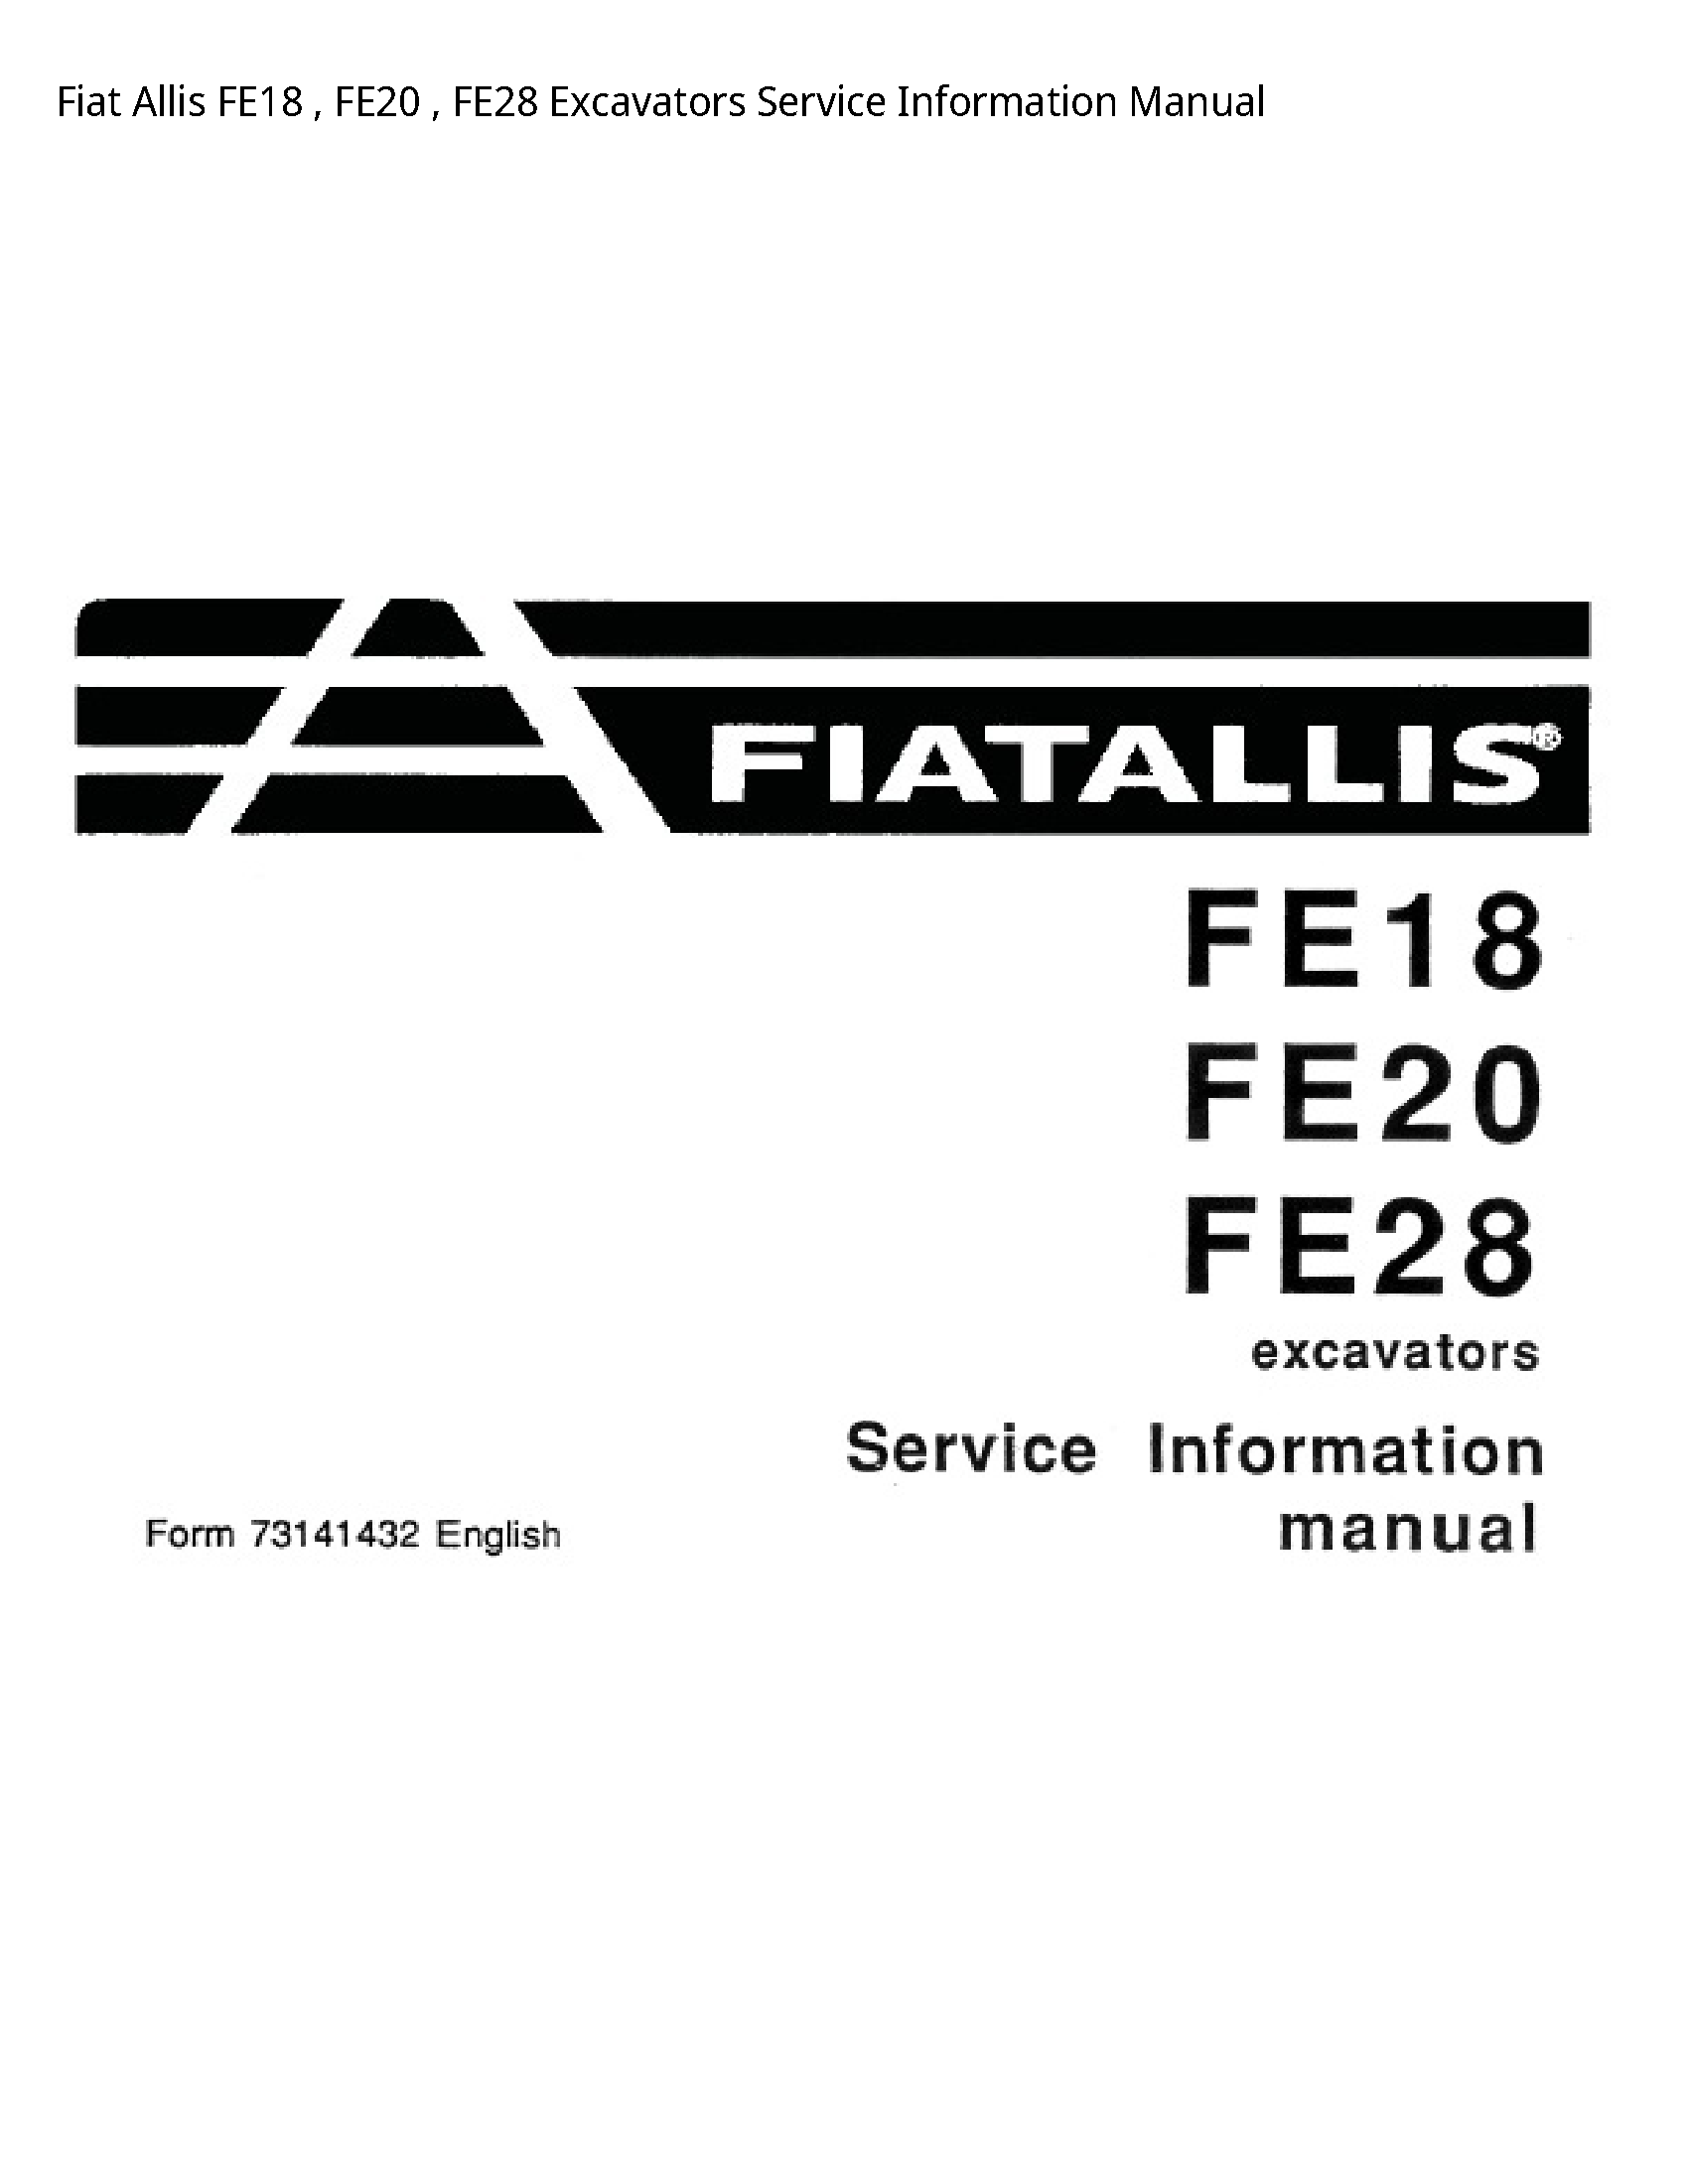 Fiat Allis FE18 Excavators Service Information manual